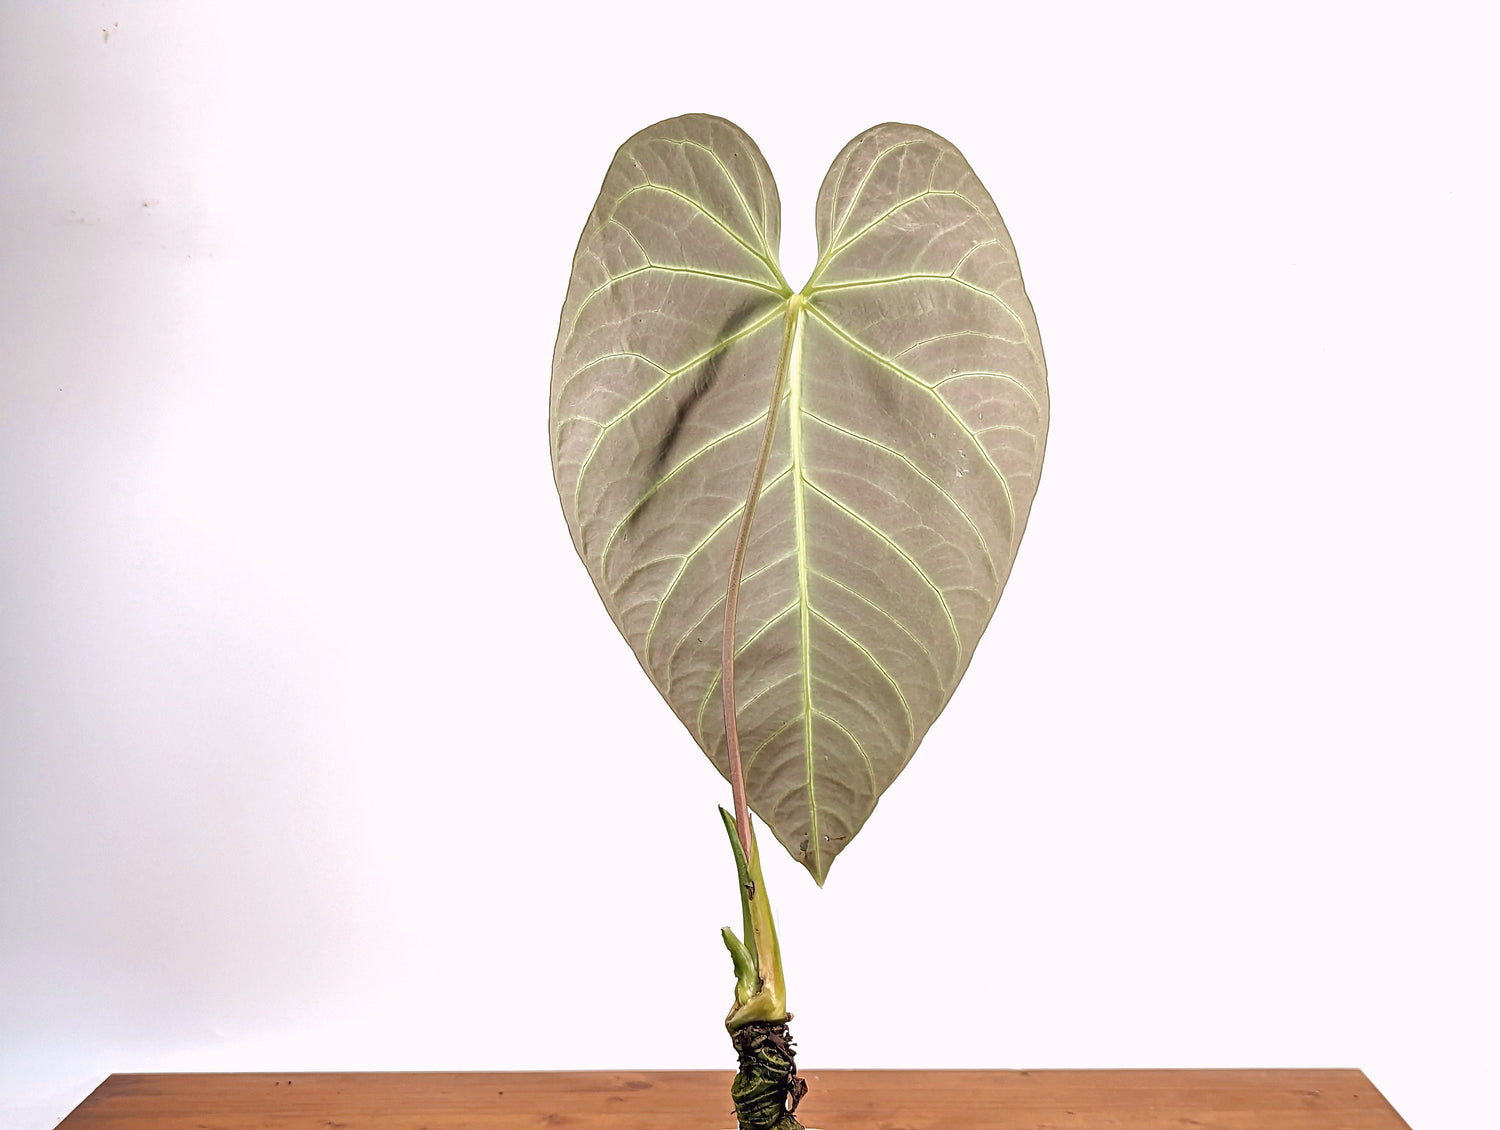 Anthurium regale - Exact Specimen Approx 2 ft tall